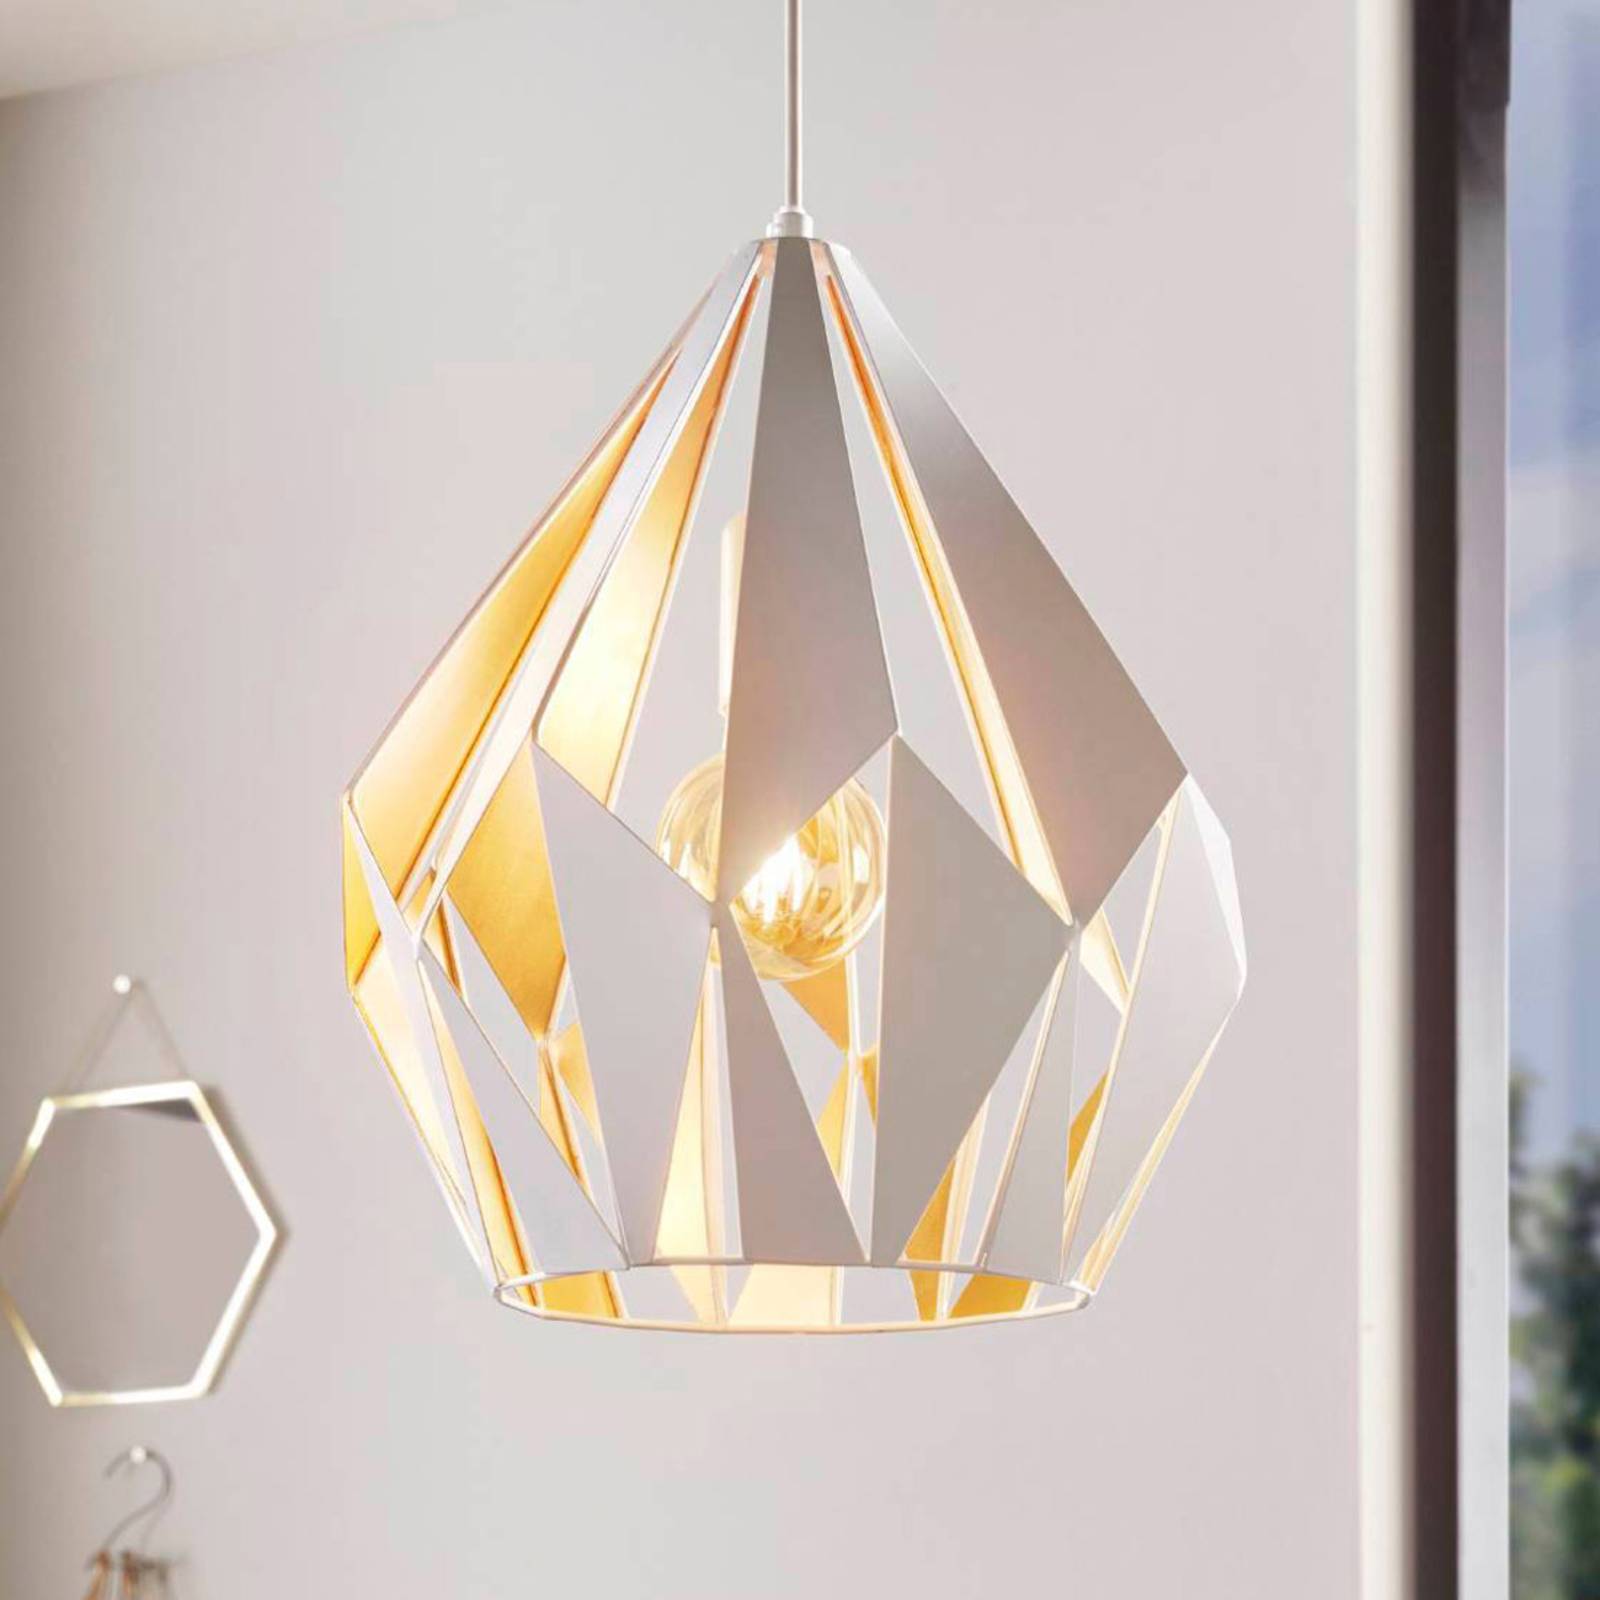 Photos - Chandelier / Lamp EGLO Carlton pendant light, white and gold, Ø 31 cm 